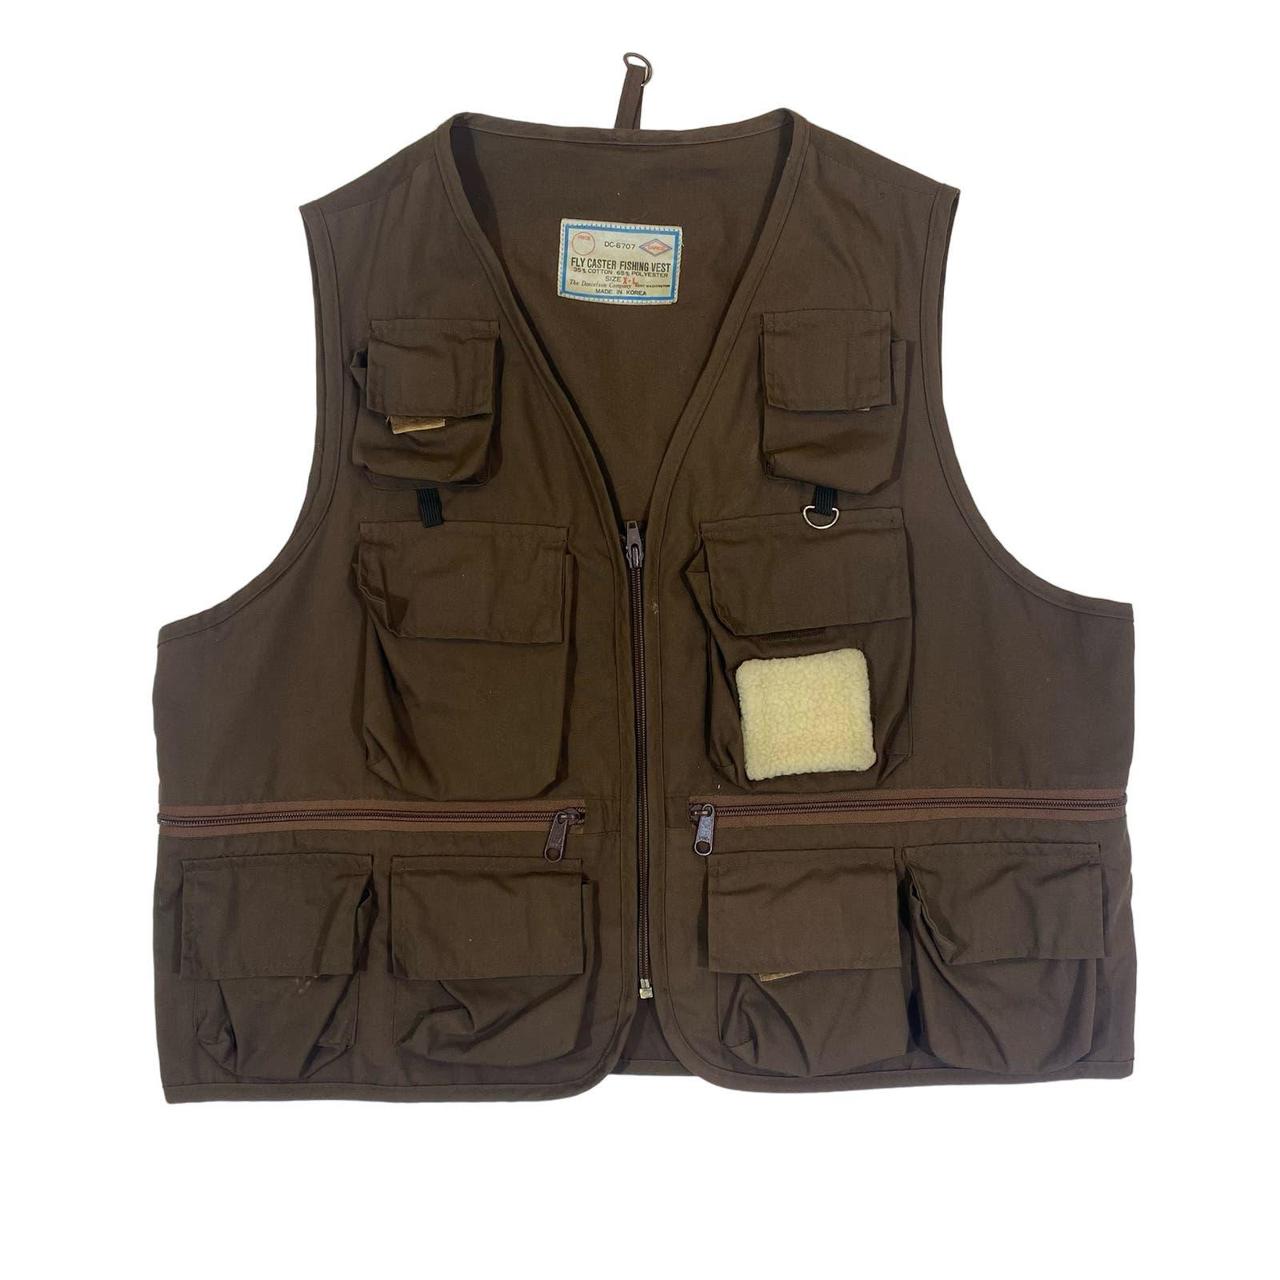 Vintage 80s fishing vest brown tactical cargo - Depop